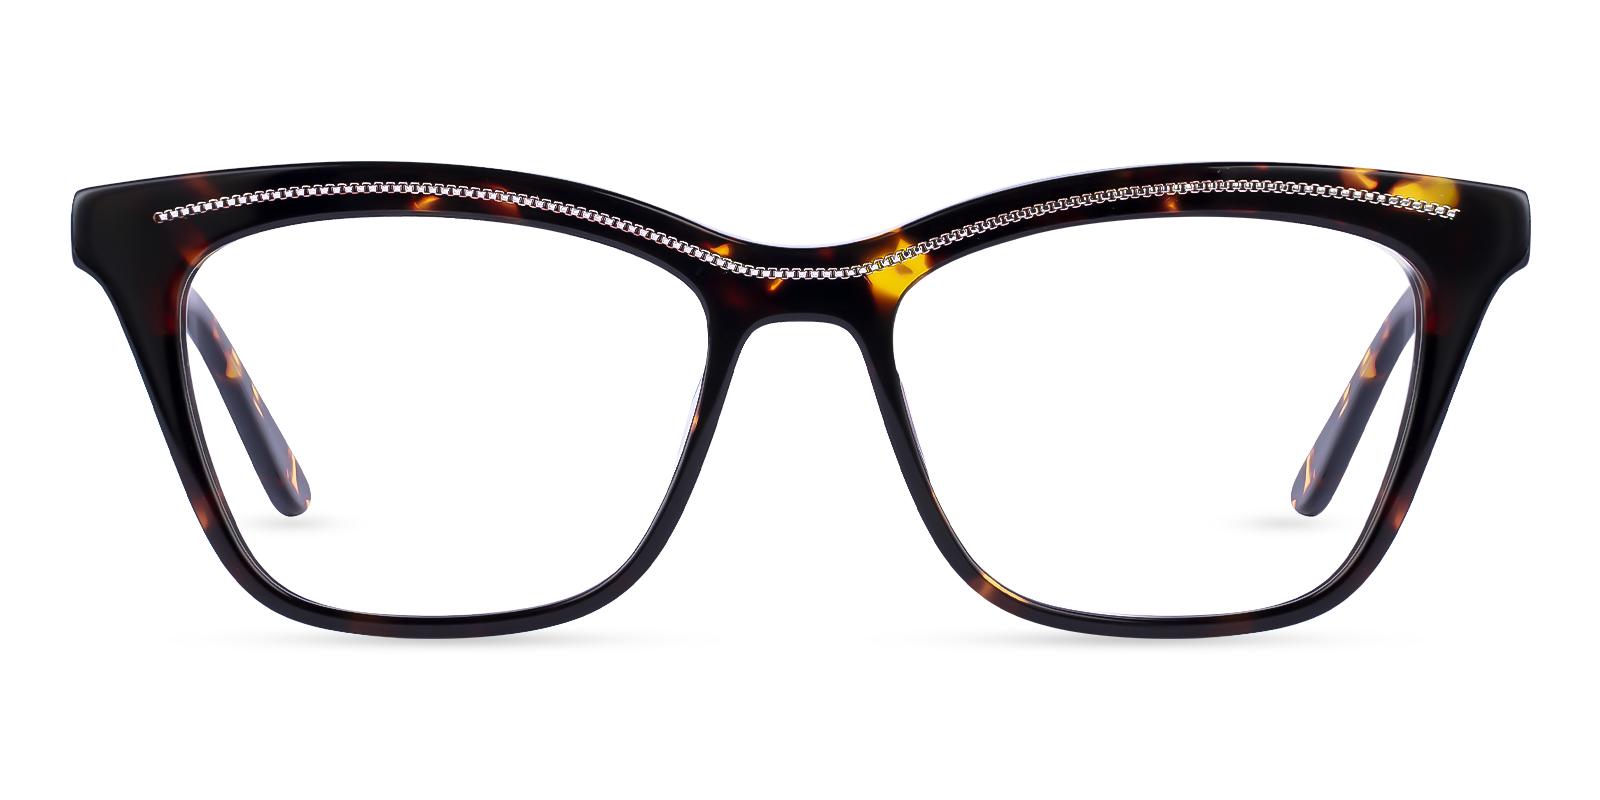 Kate Tortoise Acetate Eyeglasses , Fashion , SpringHinges , UniversalBridgeFit Frames from ABBE Glasses